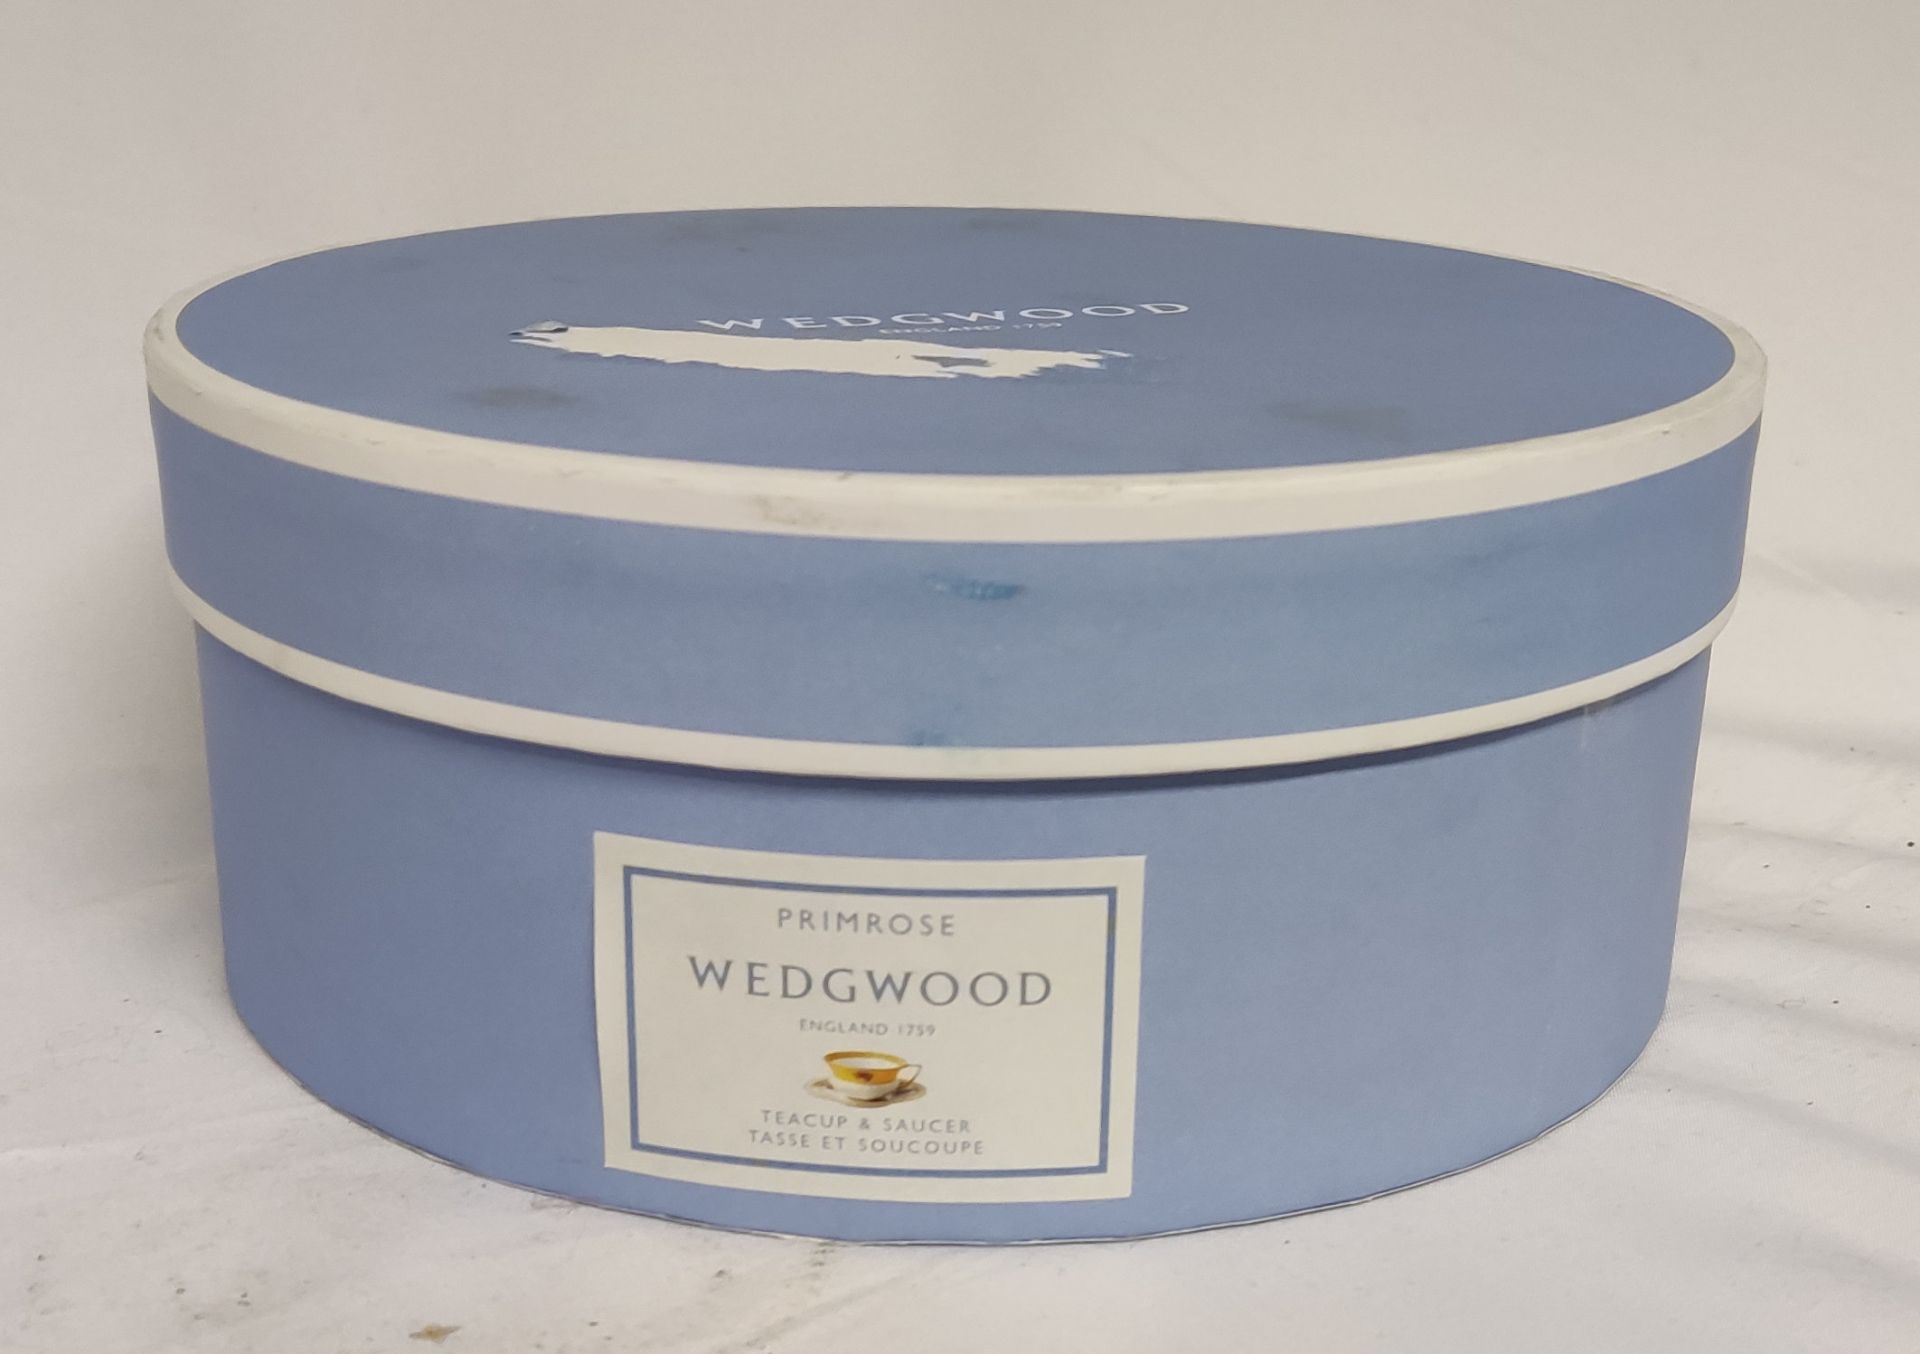 1 x WEDGWOOD Wonderlust Primrose Teacup & Saucer - Boxed - RRP £65 - Ref: /HOC250/HC5 - CL987 - - Image 13 of 16